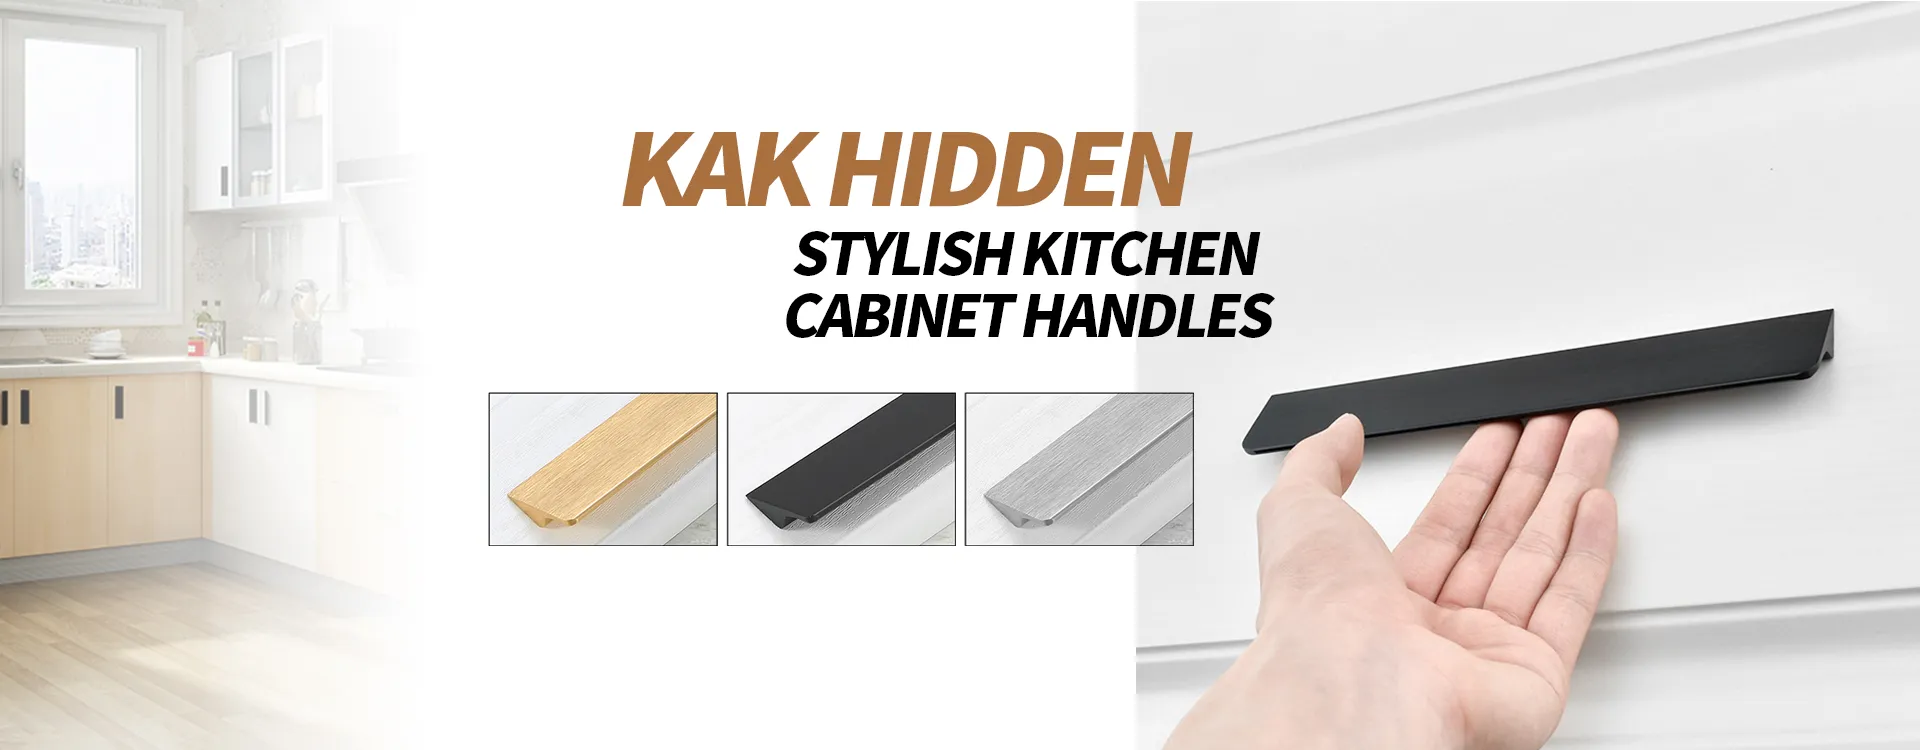 KAK 35KG/350N Bed Hydraulic Hinge Force Lift Support Furniture Gas Spring Cabinet Door Kitchen Cupboard Hinges For Hardware